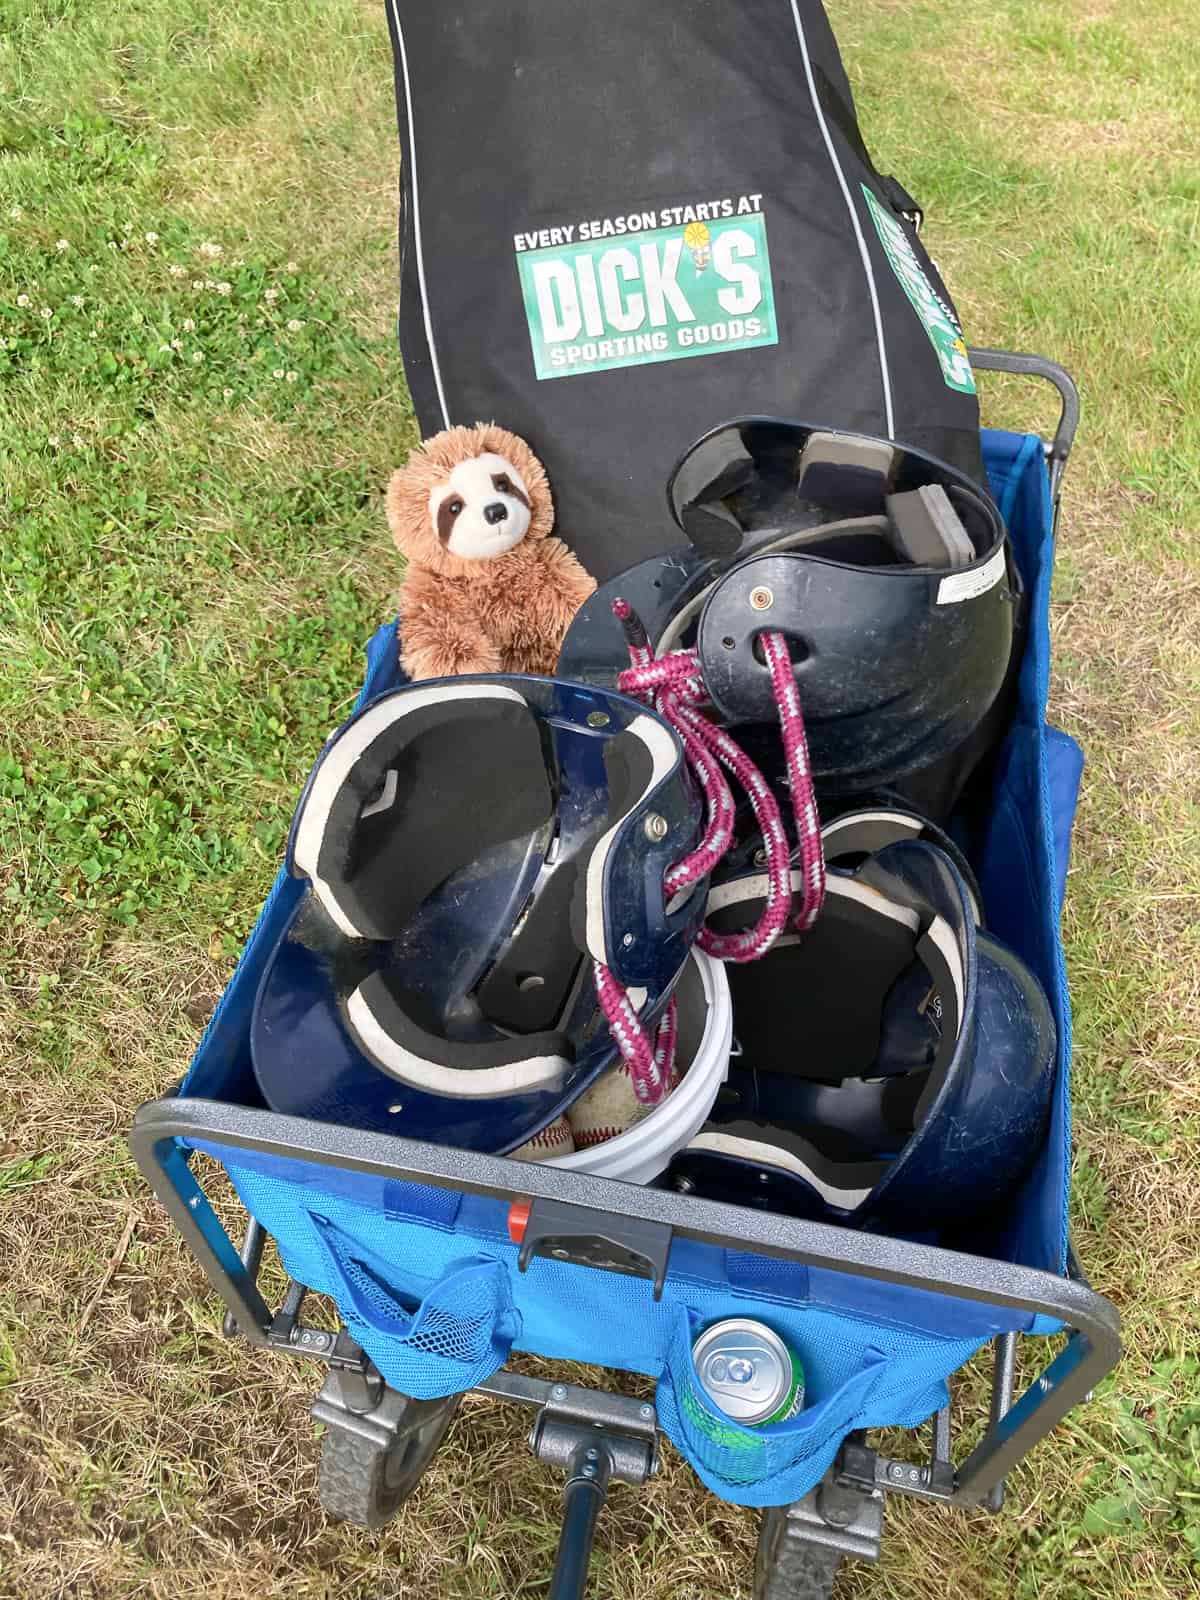 a wagon full of baseball equipment and a stuffed sloth